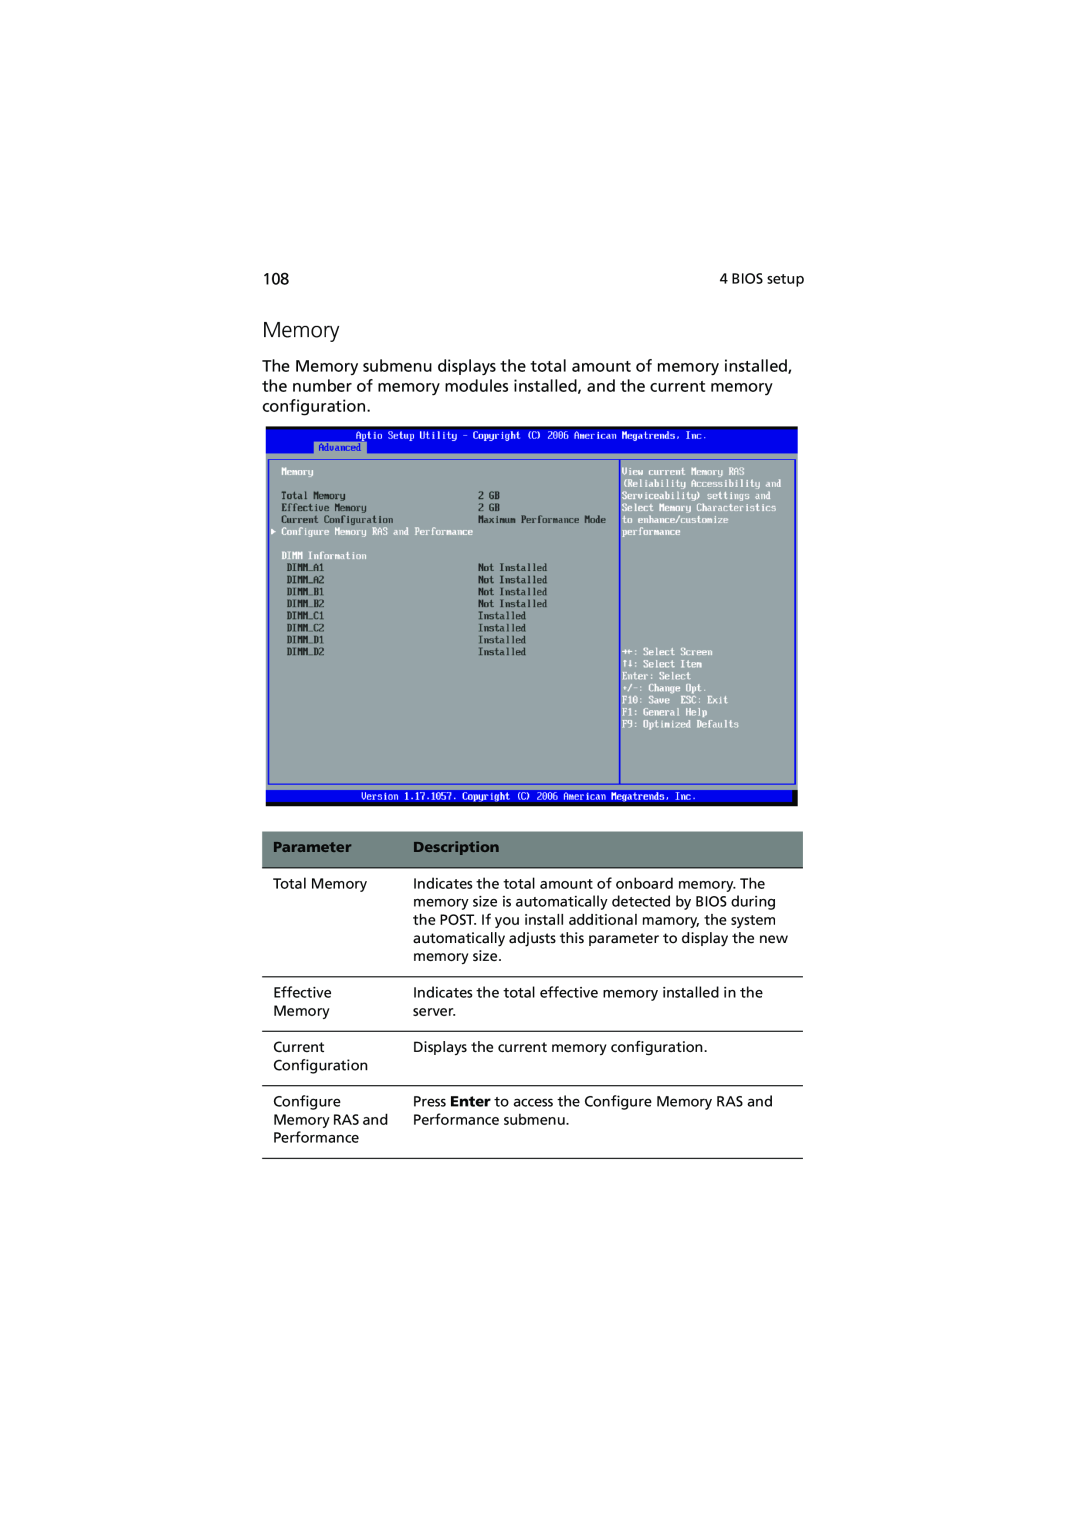 Acer R720 Series manual Memory, Parameter, Description 